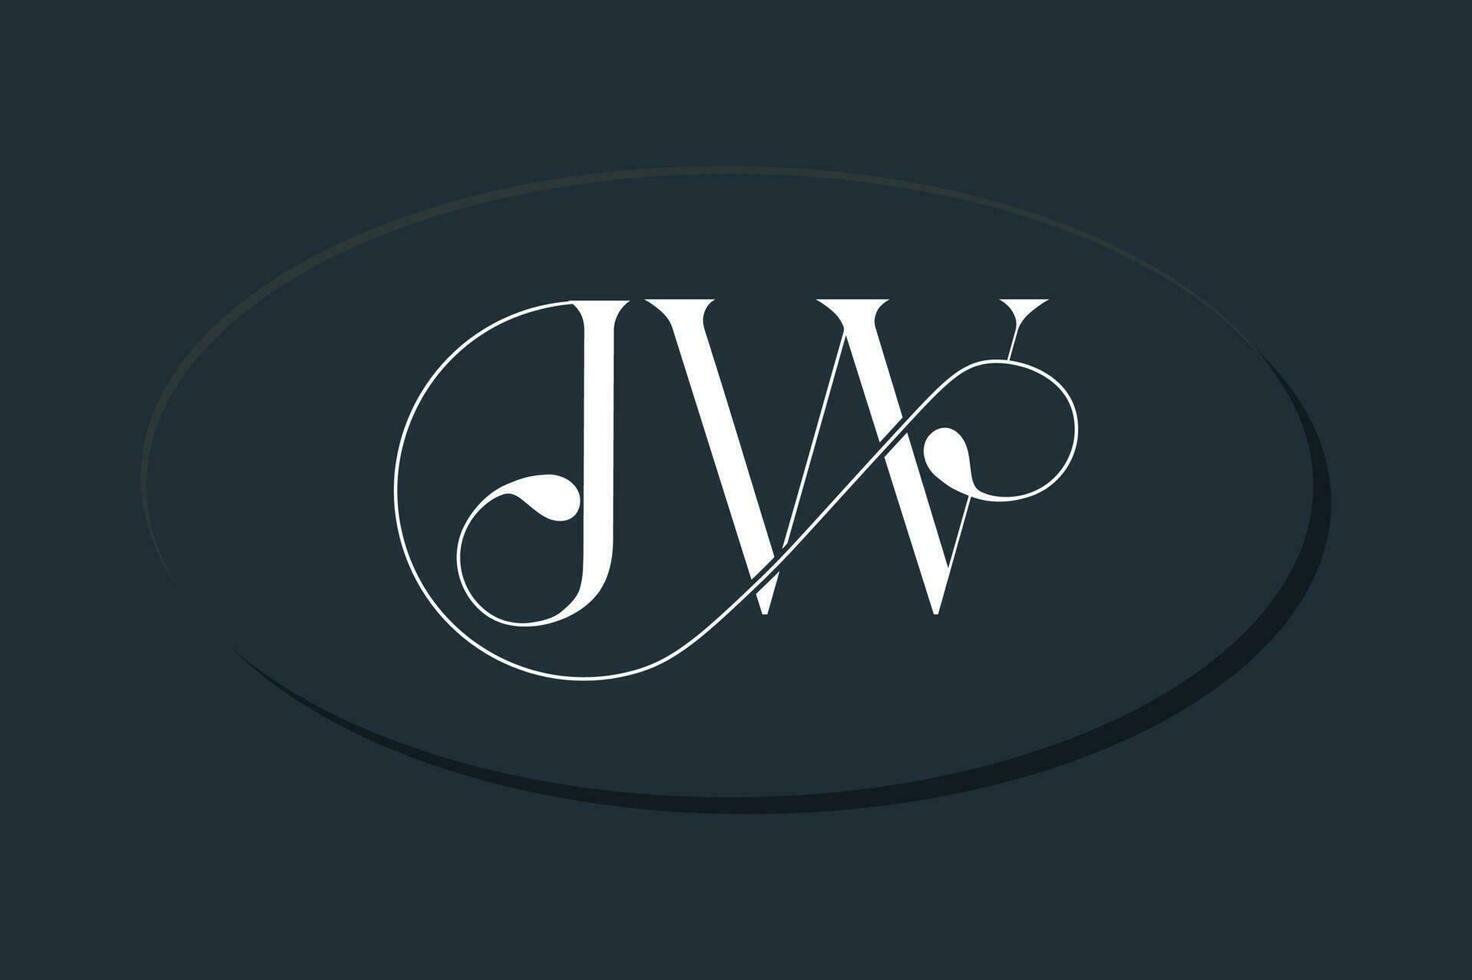 jw tipografía ligadura estilo logo diseño modelo vector